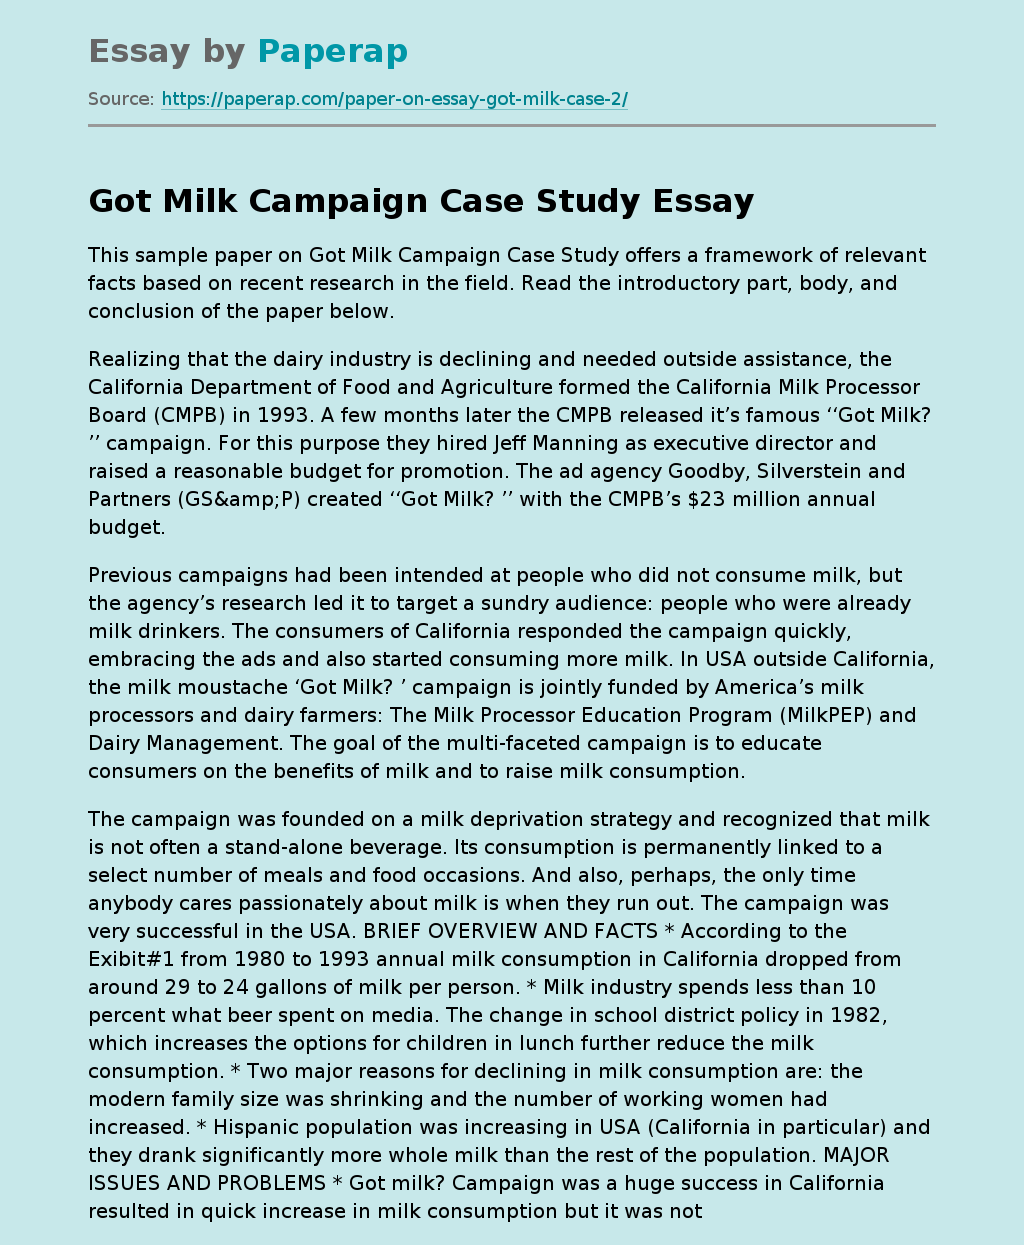 Got Milk Campaign Case Study